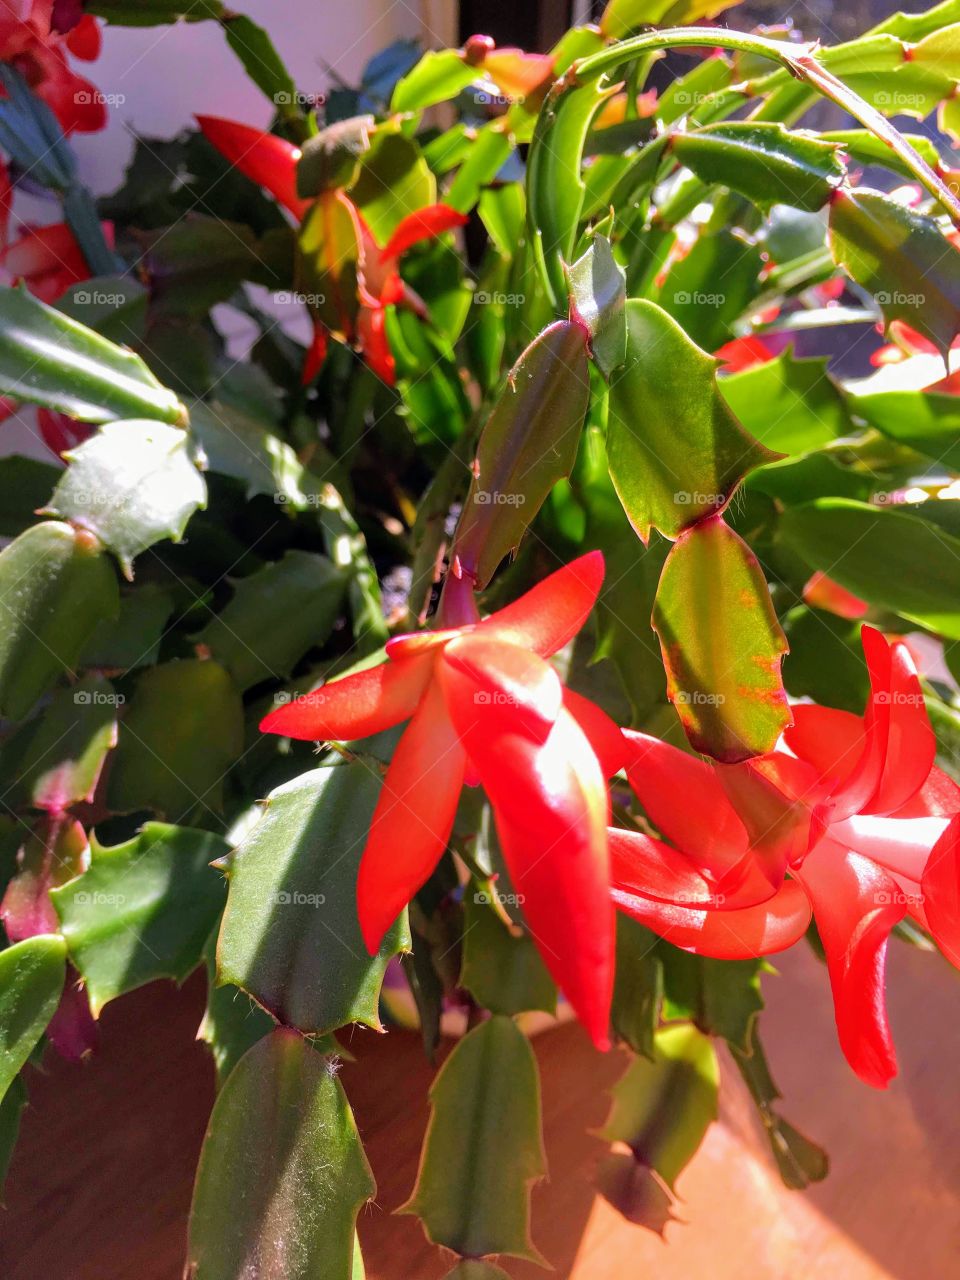 Planta suculenta exótica de flores rojas